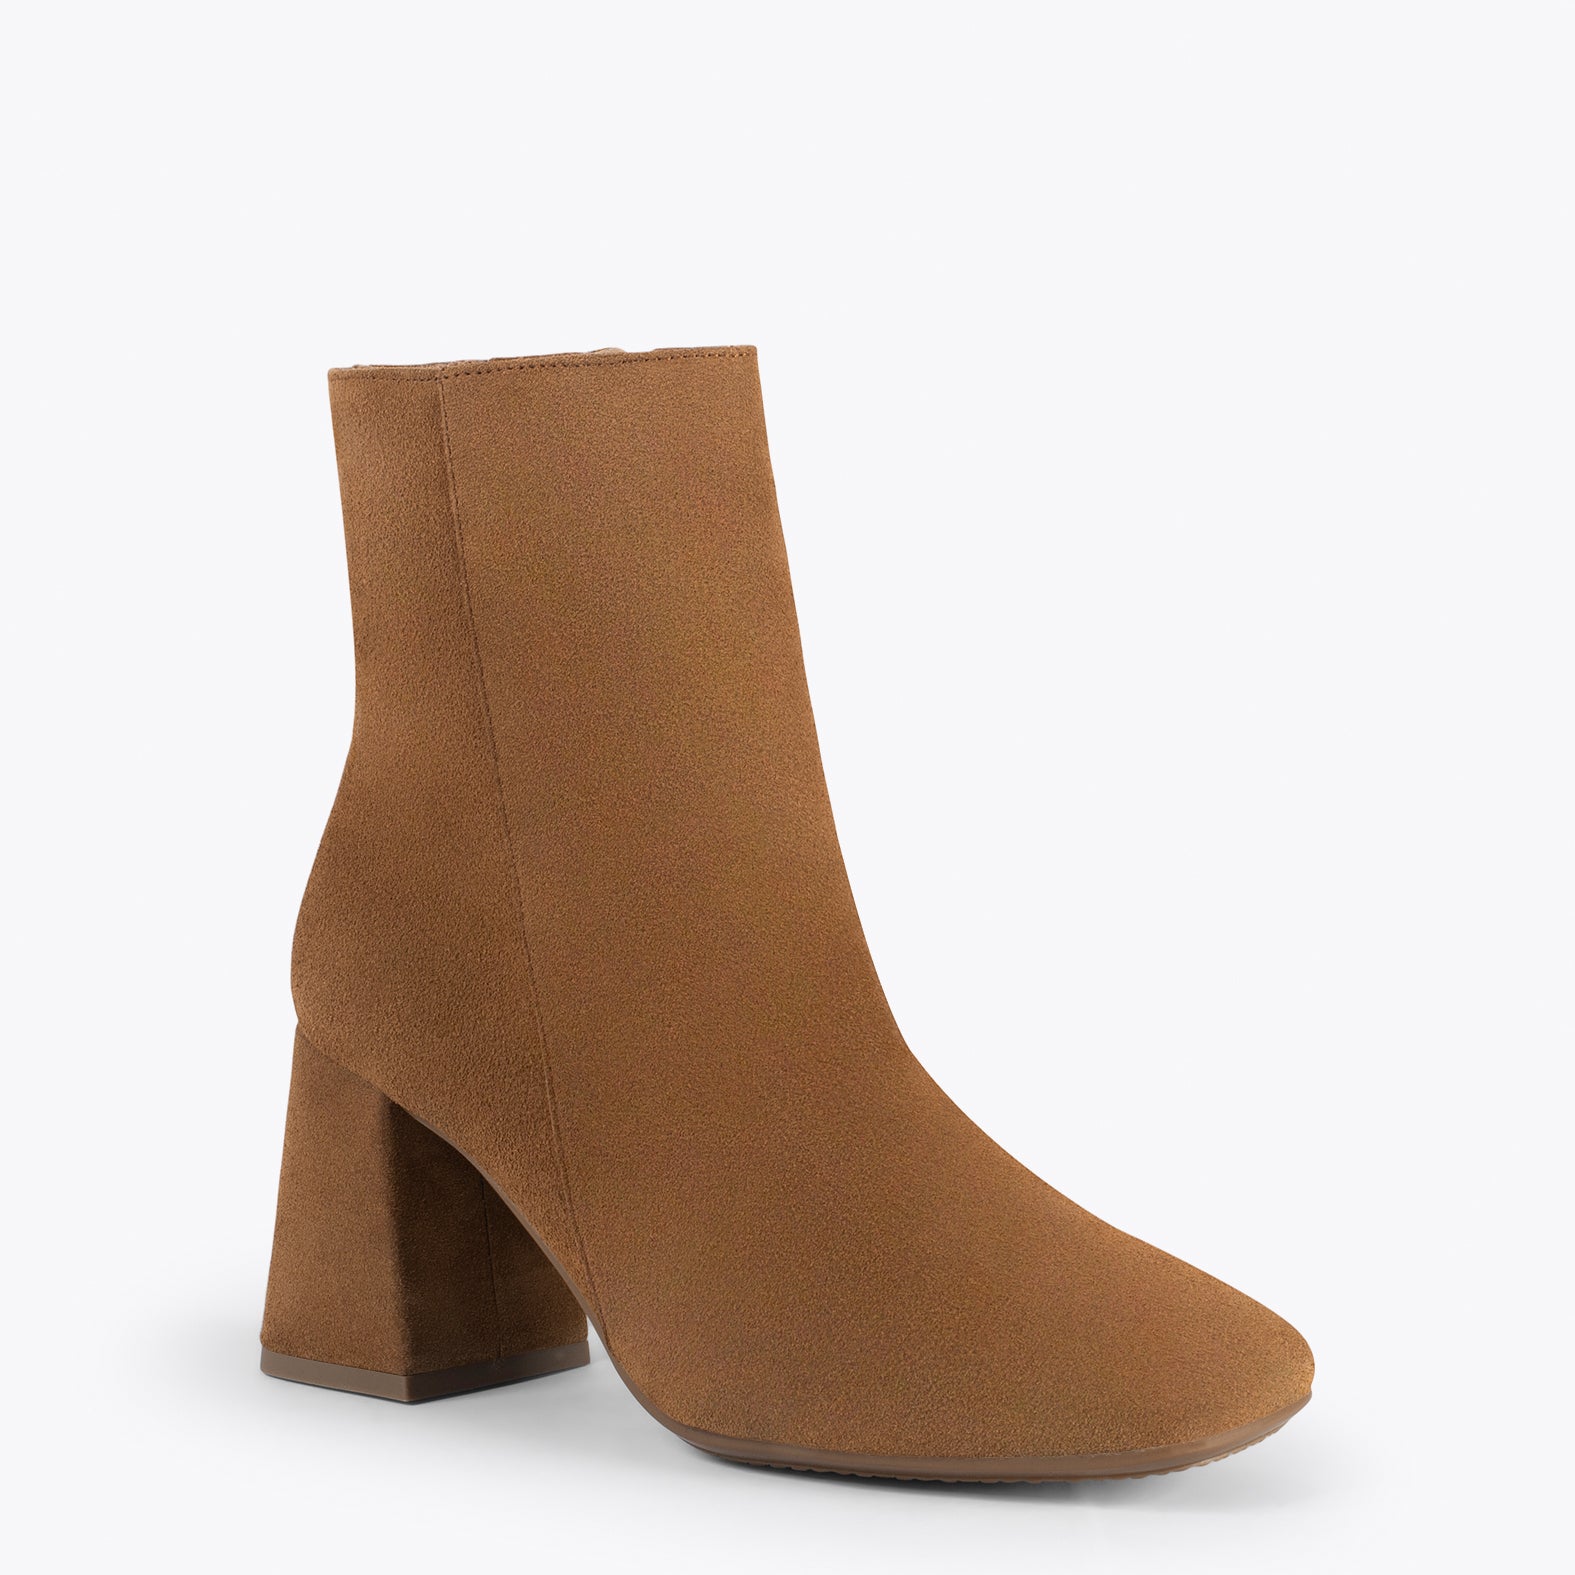 PARIS – CAMEL square toe bootie with block heel